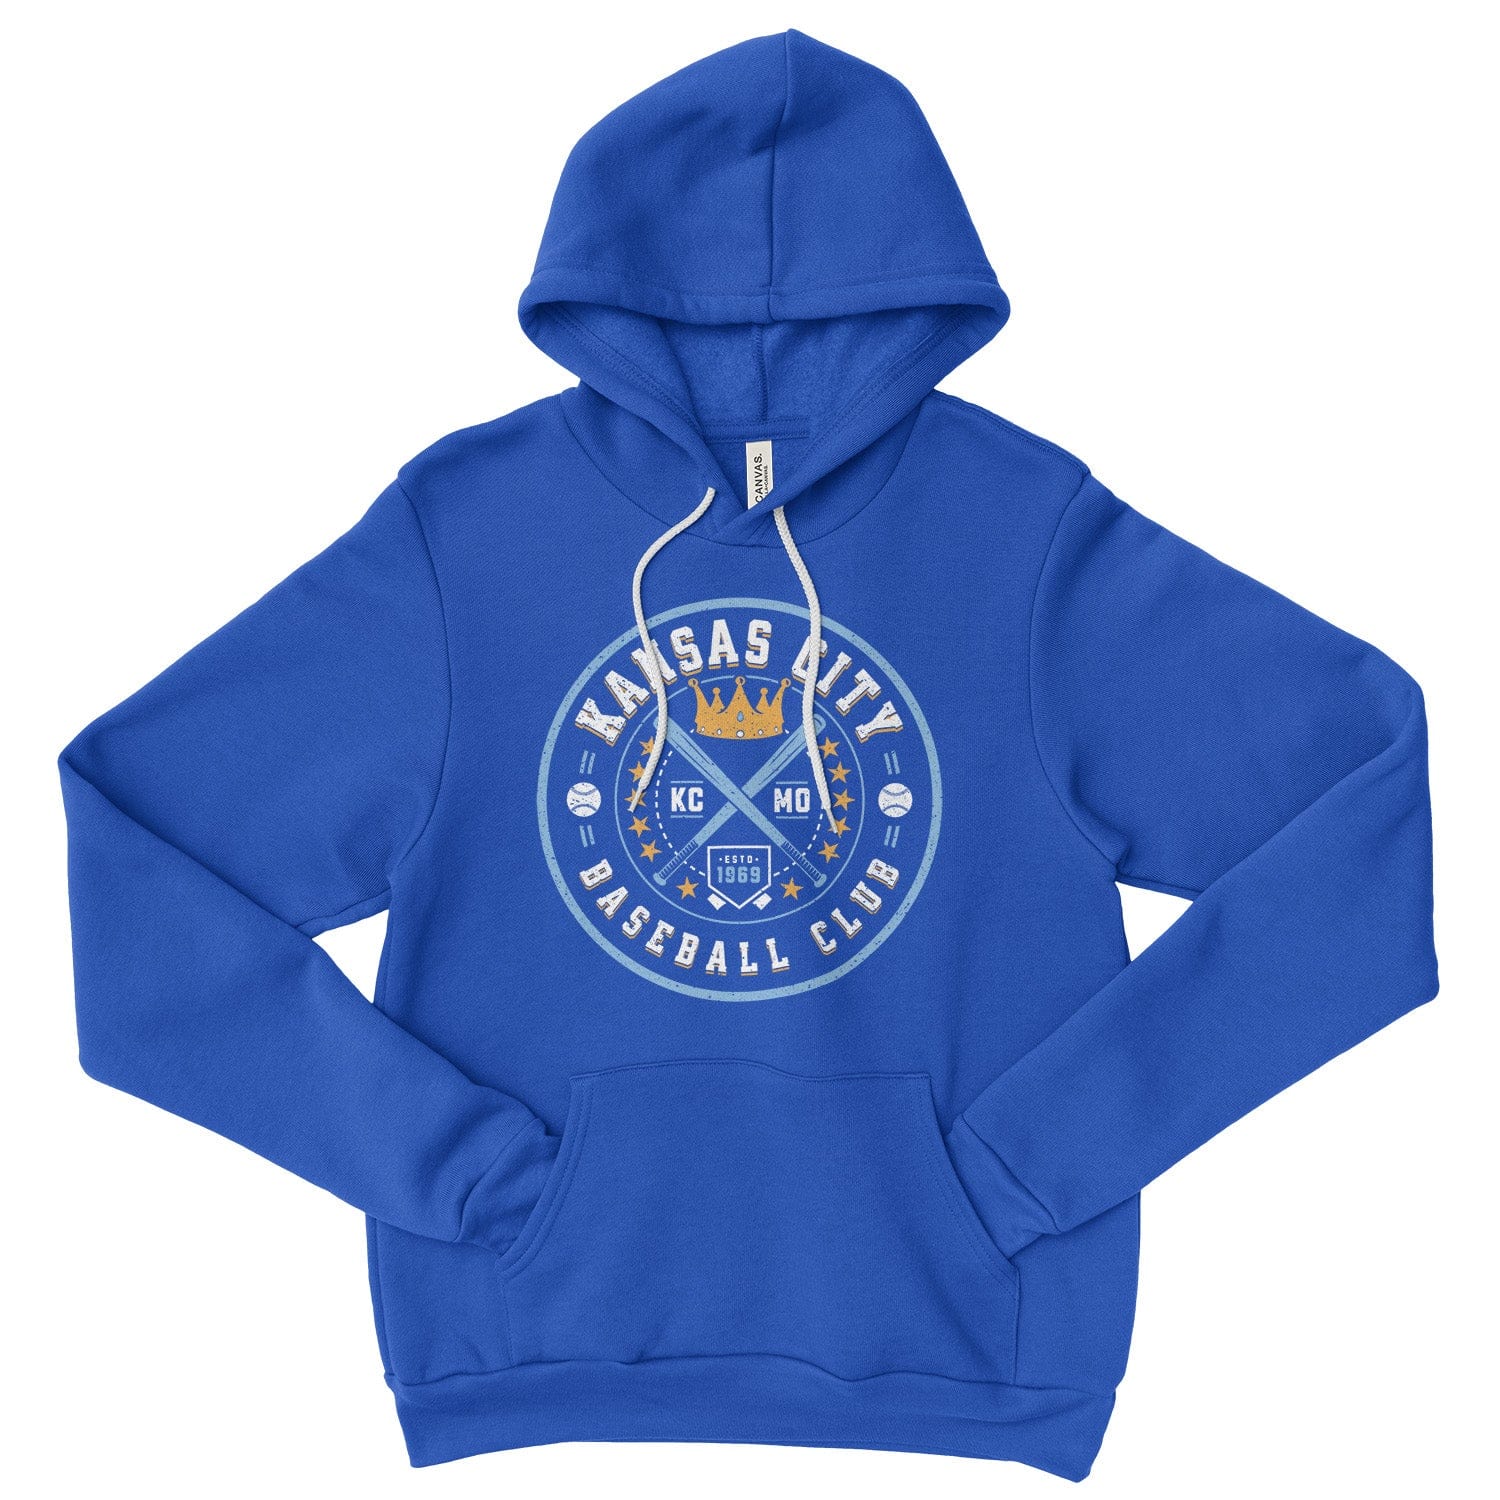 KC Swag Kansas City Royals powder, gold KC BASEBALL CLUB on royal blue fleece pullover hoodie 